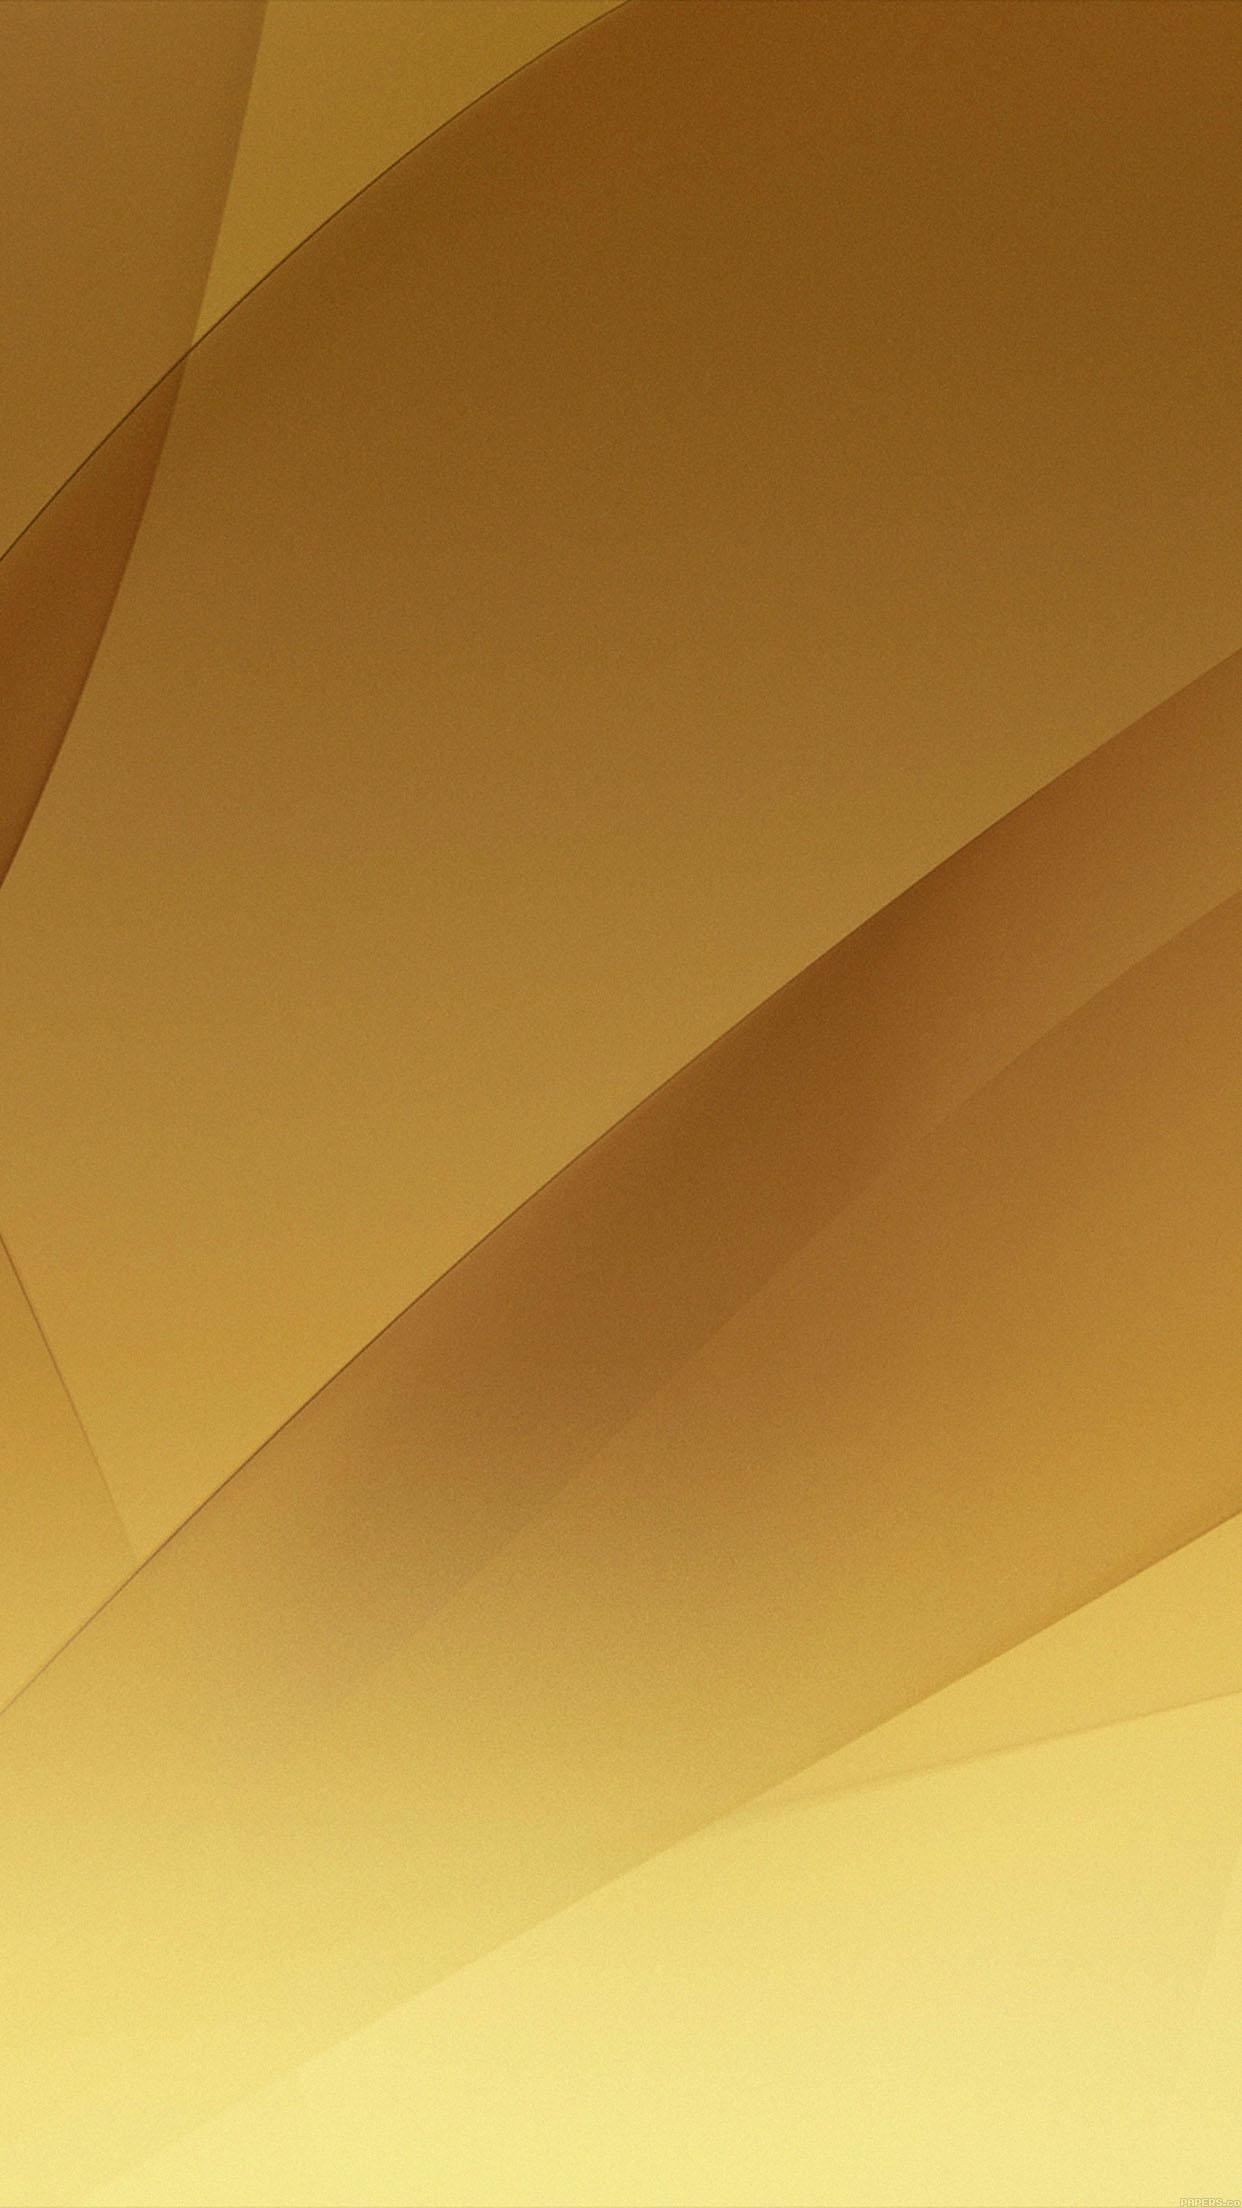 Golden iPhone Hd Wallpapers - Wallpaper Cave